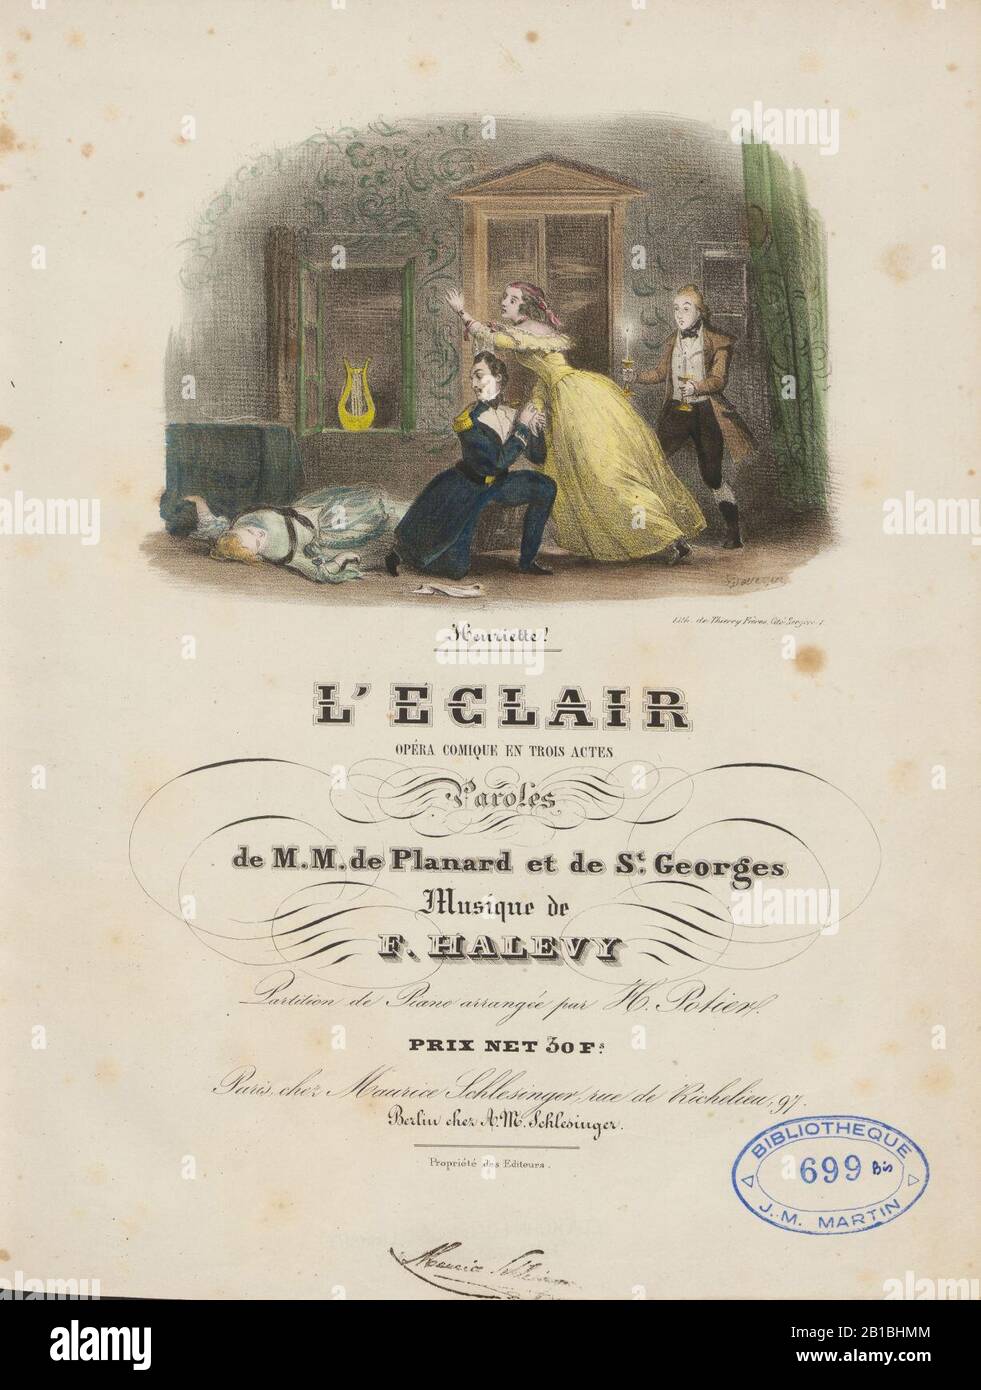 Fromental Halévy, L'Éclair Score Cover. Stockfoto